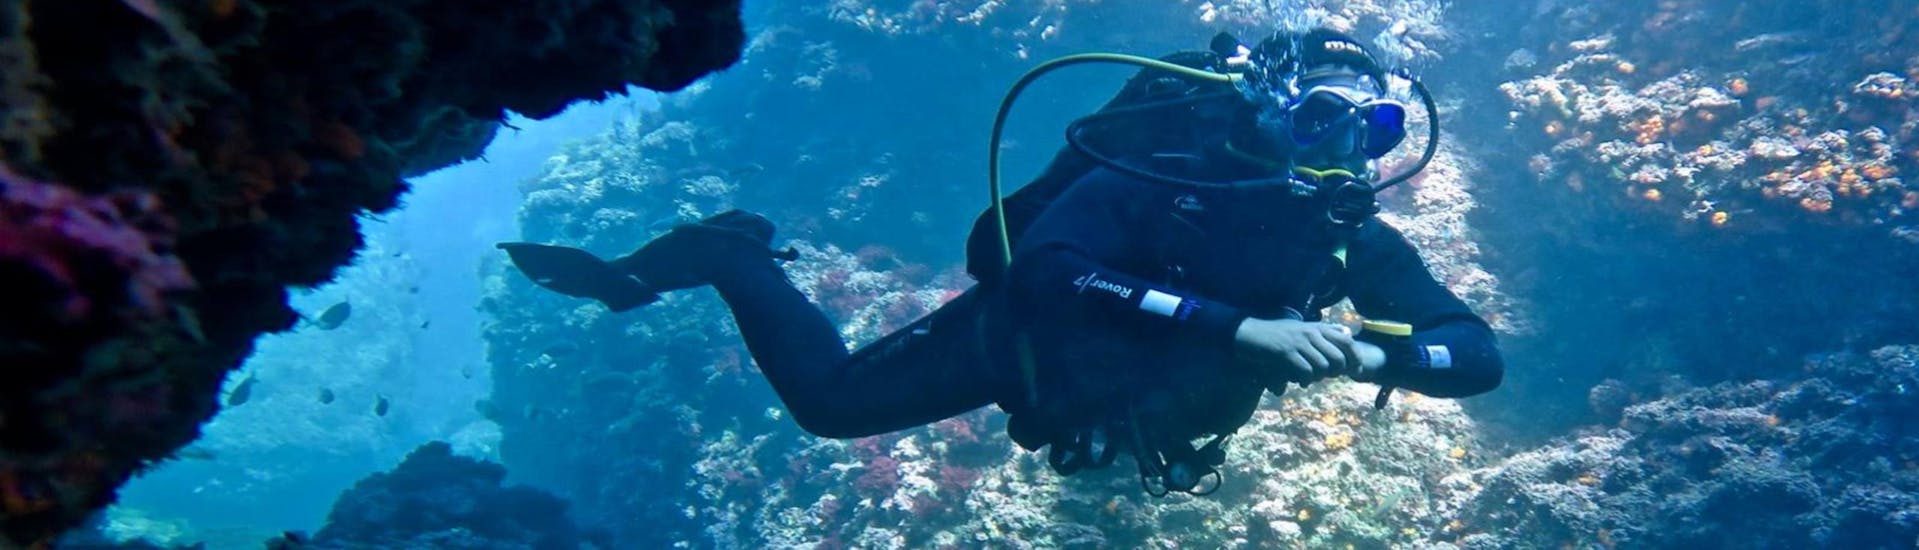 scuba-diving-course-advanced-adventure-course-leon-marina-tarifa-hero